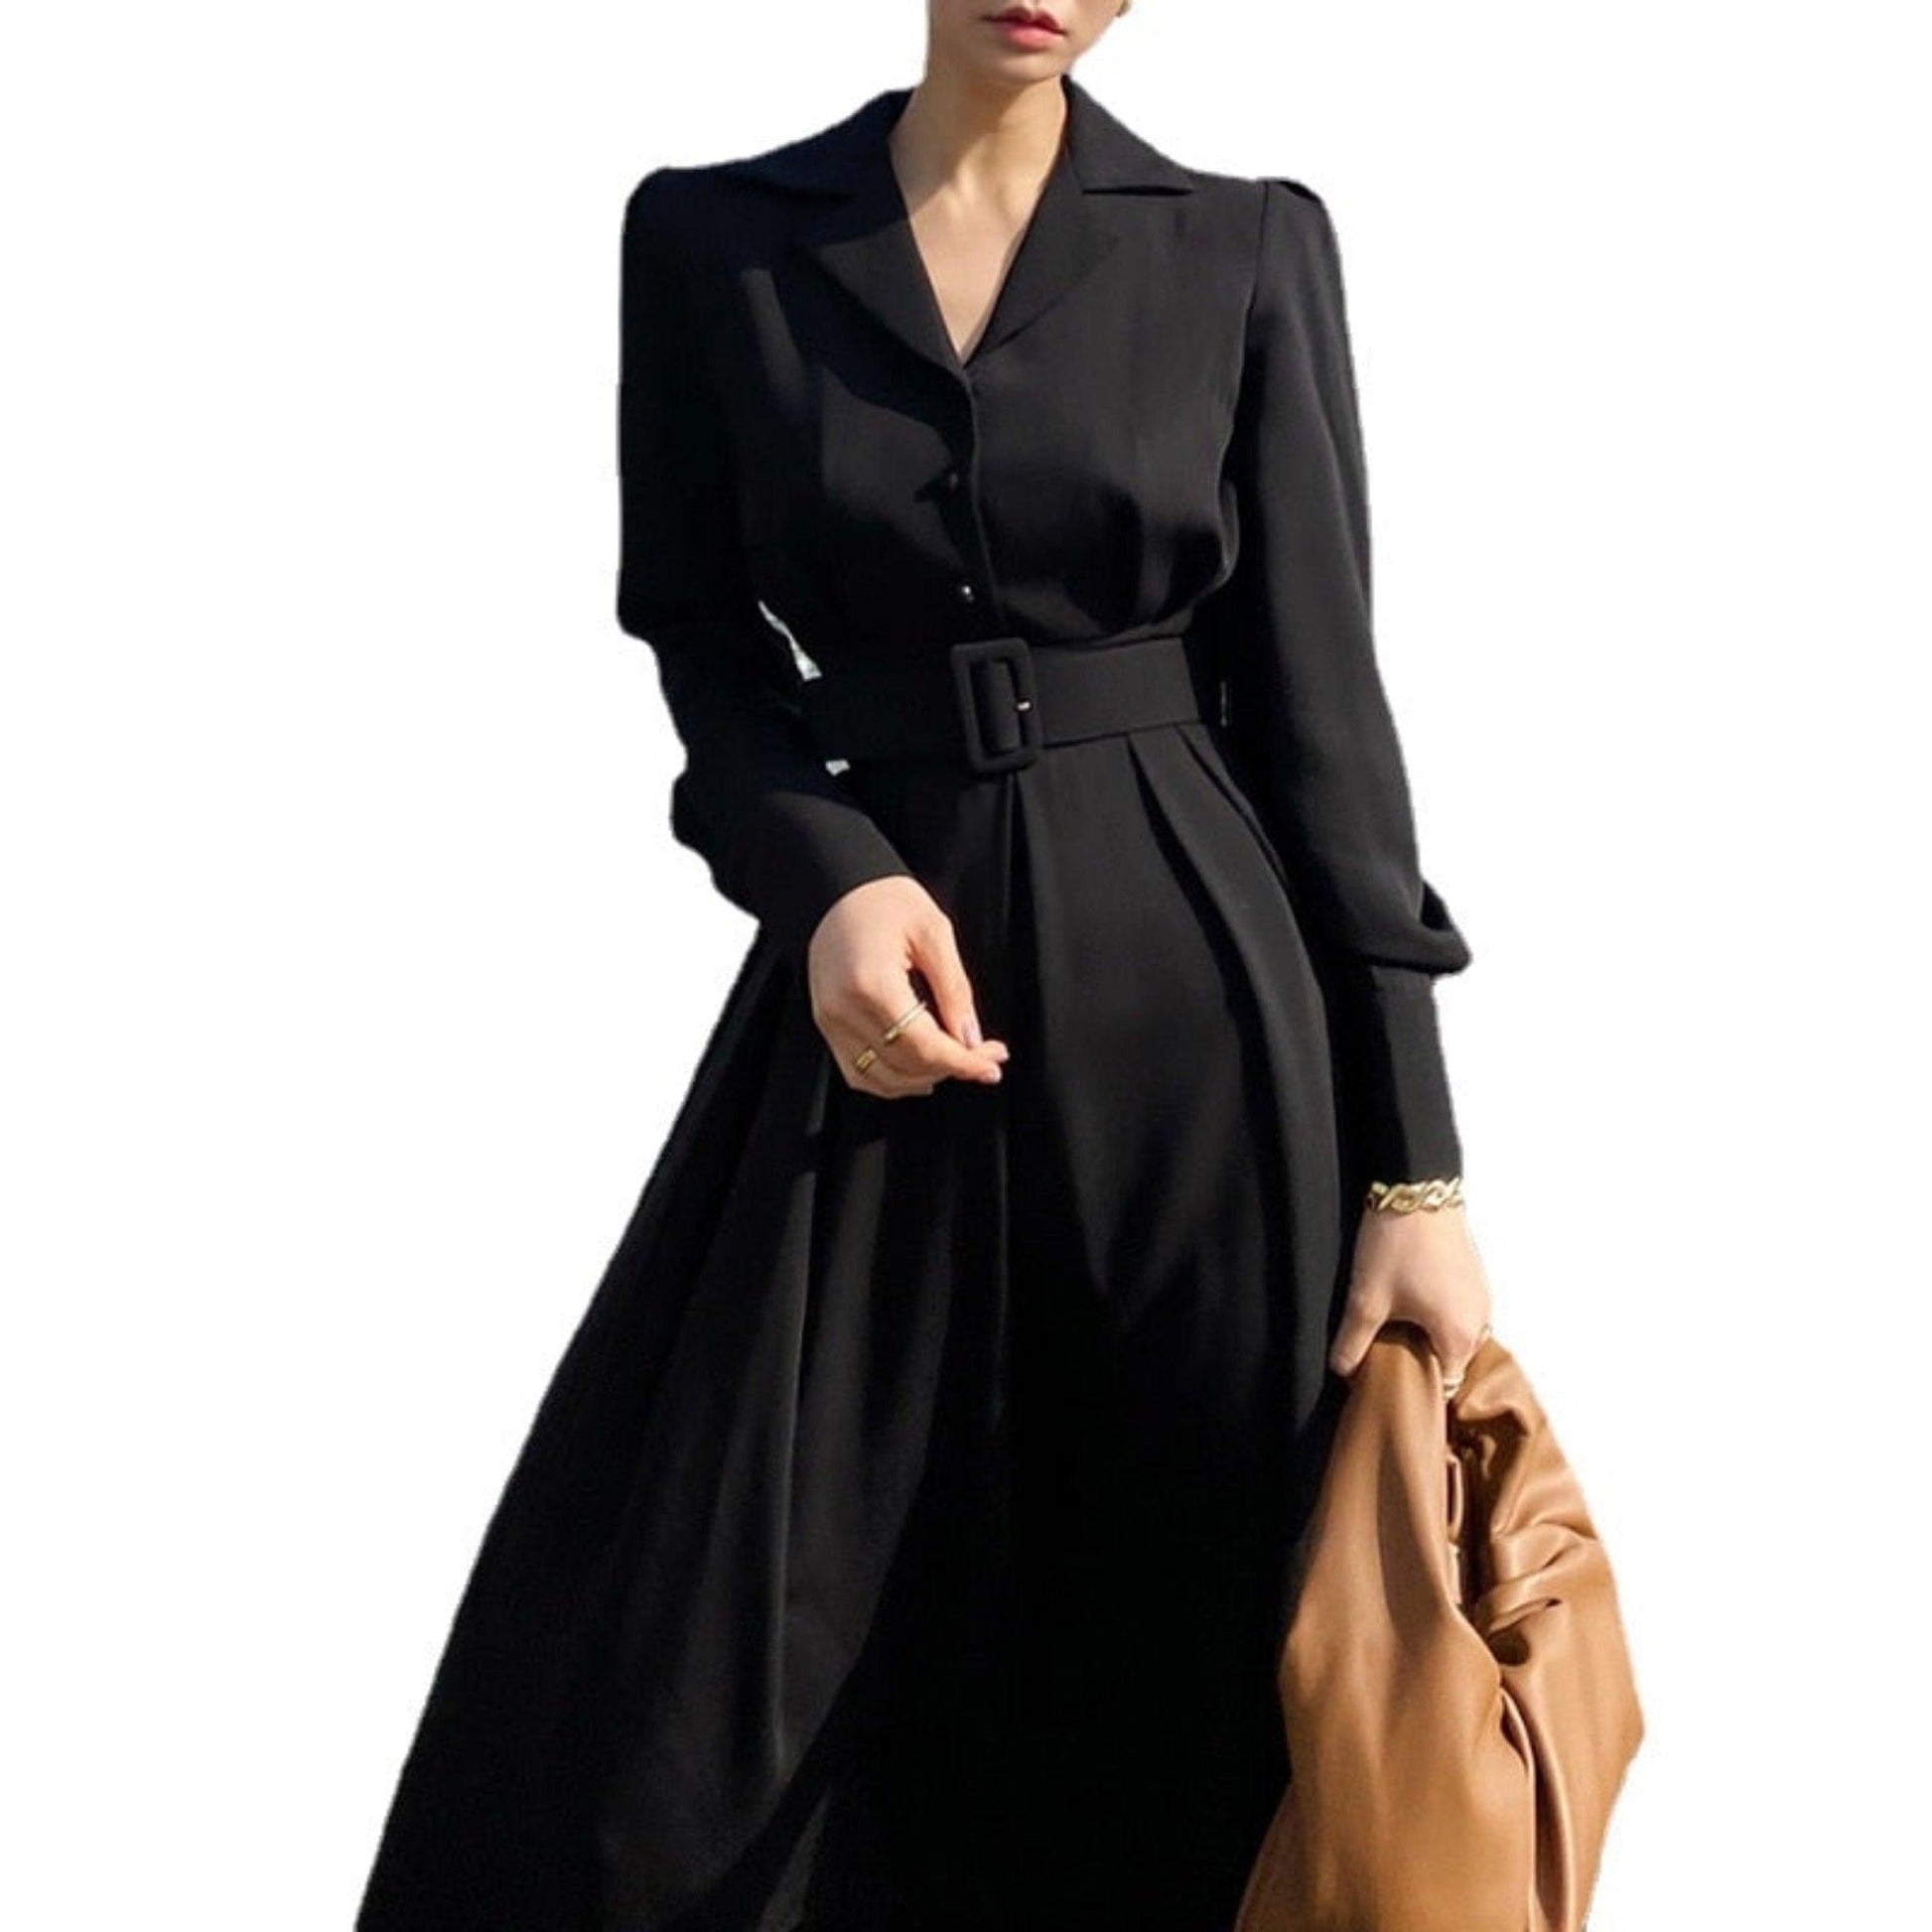 Elegance- Black maxi dress with belt Try Modest